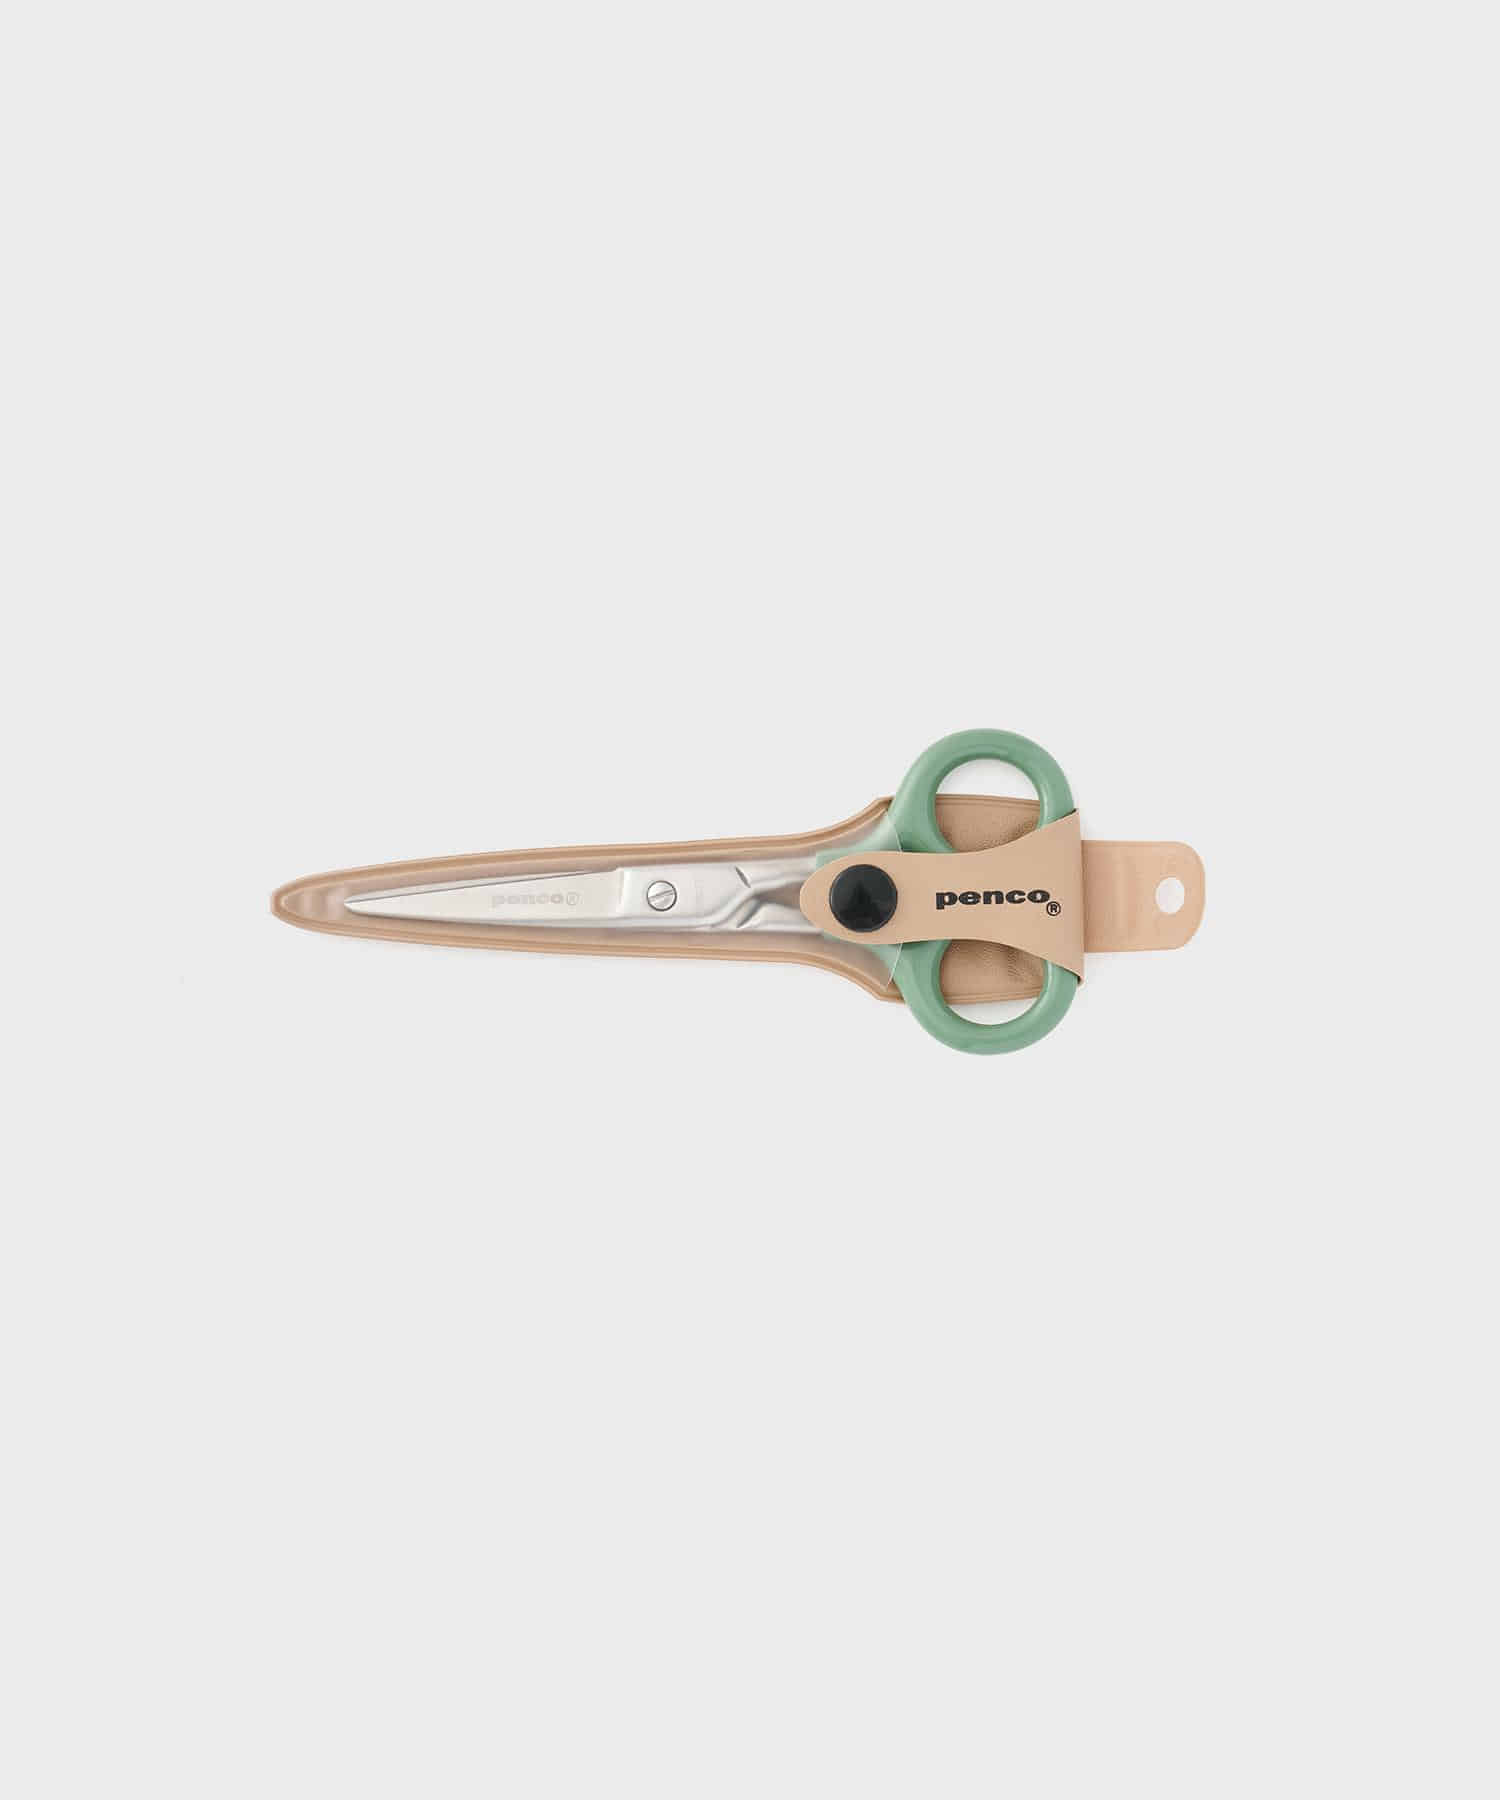 Penco Stainless Scissors (Green)